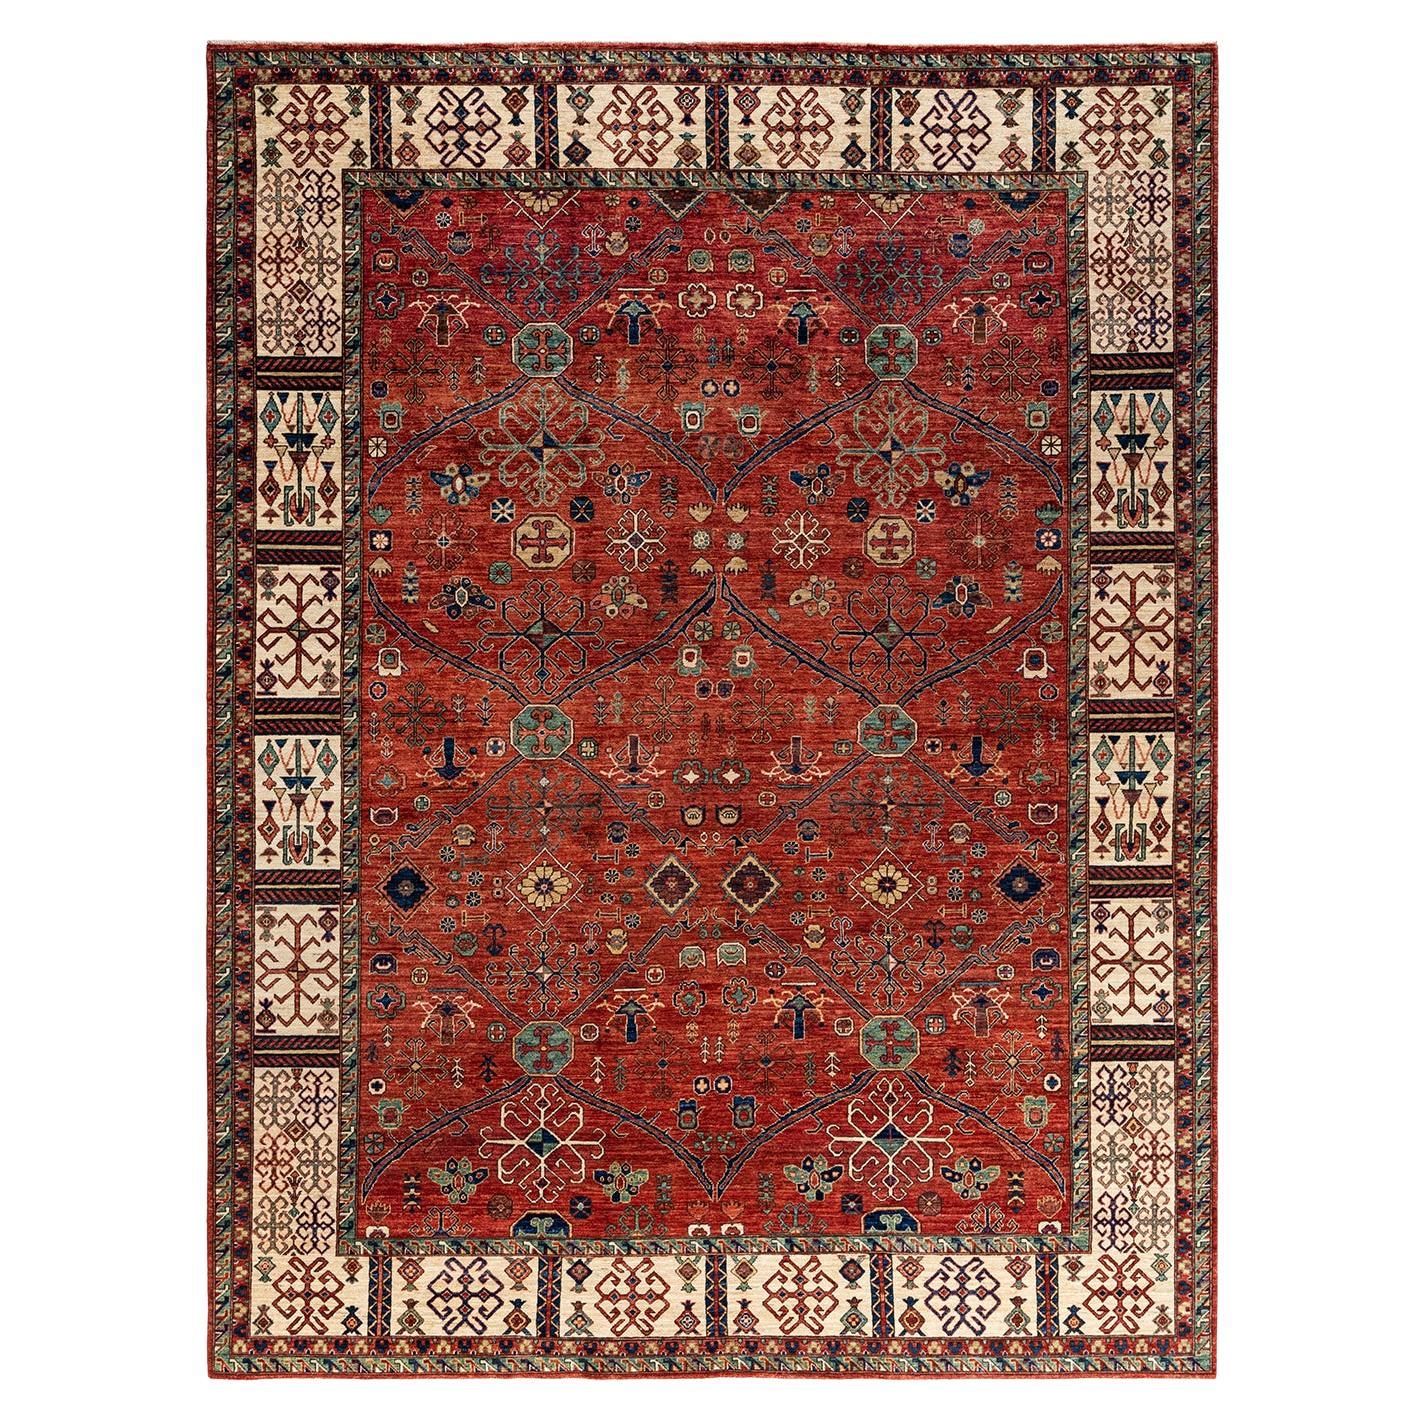 Traditioneller handgeknüpfter roter Serapi-Teppich aus Wolle